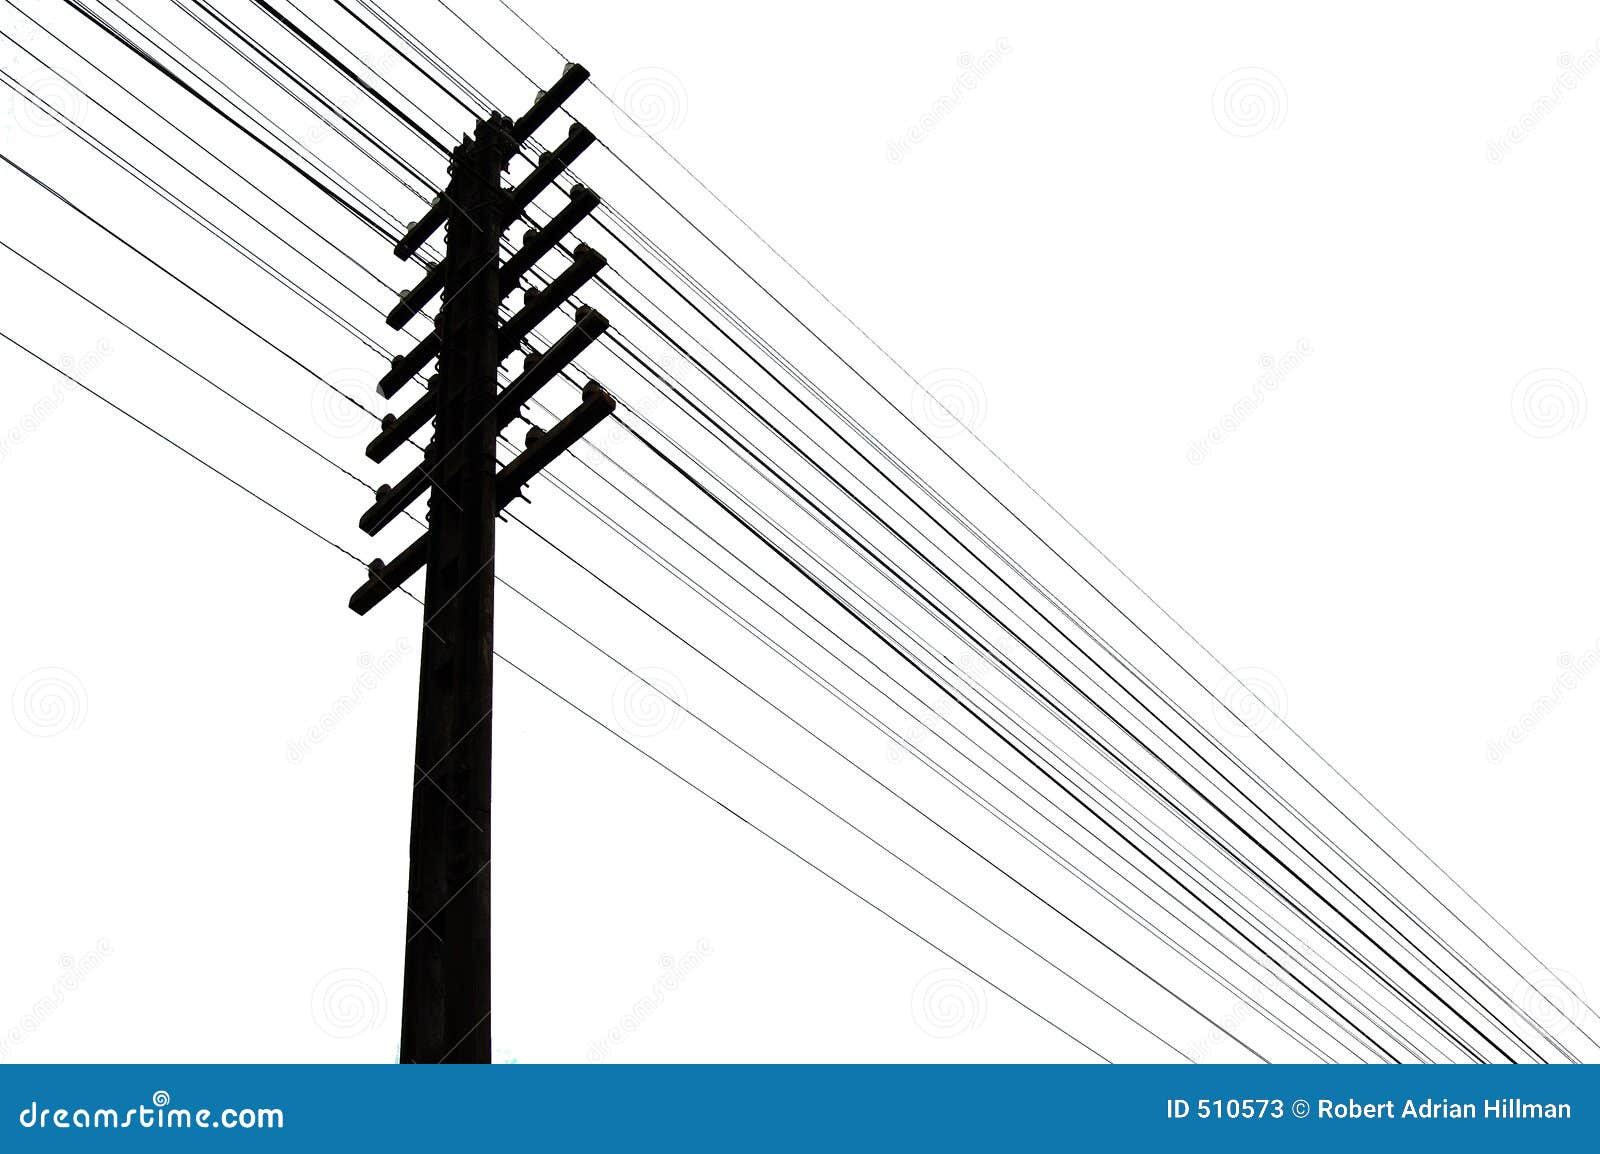 telegraph wires